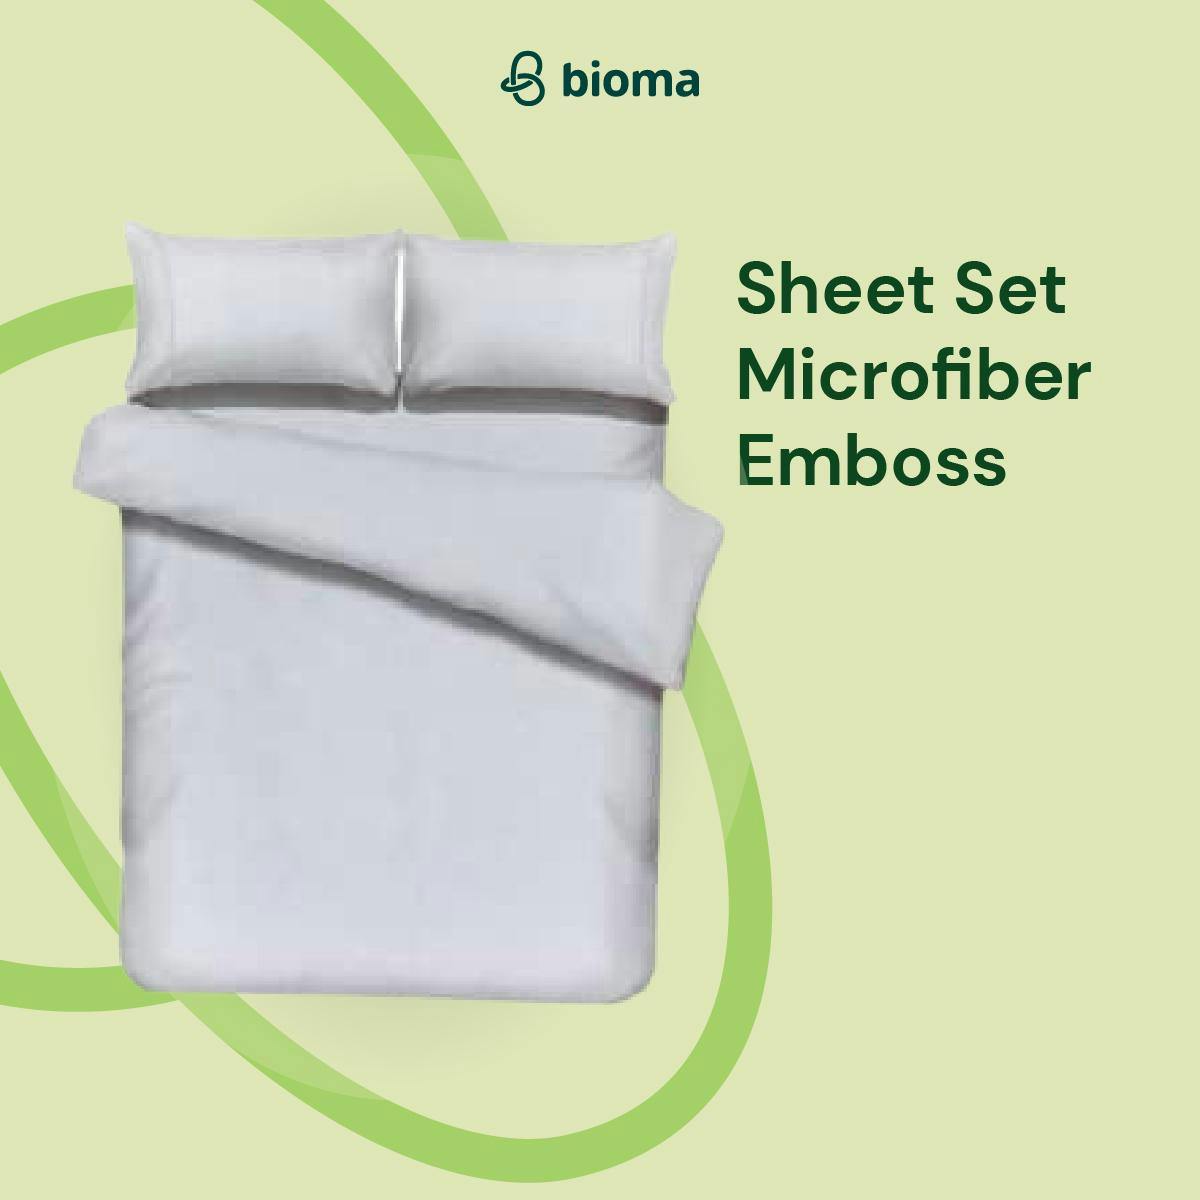 Sheet Set Microfiber Emboss